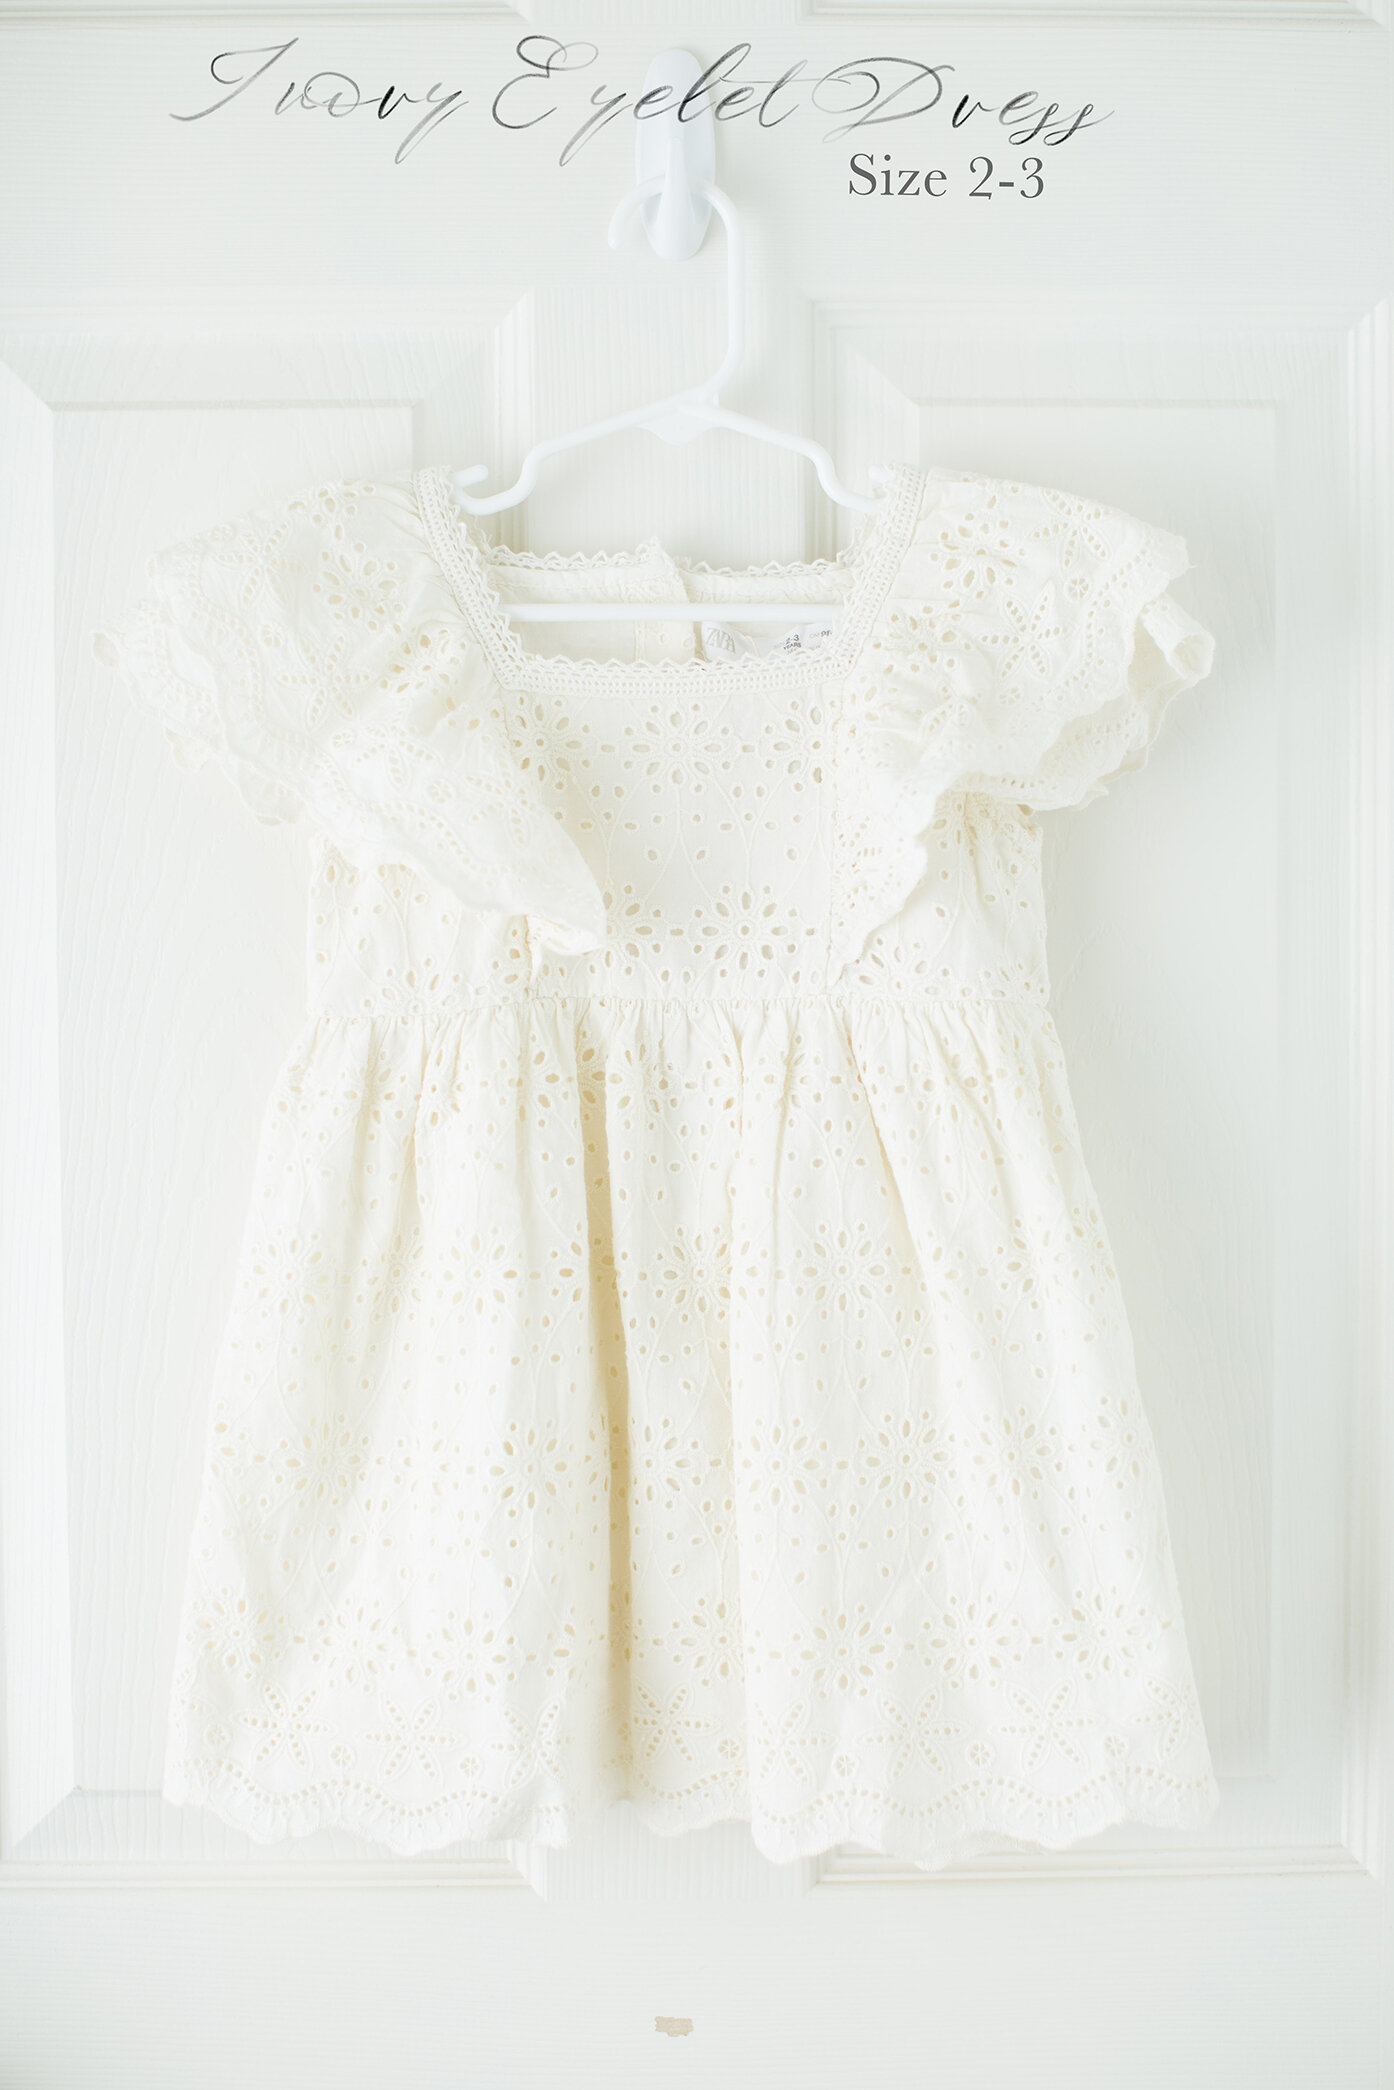 Baby photographer studio dress